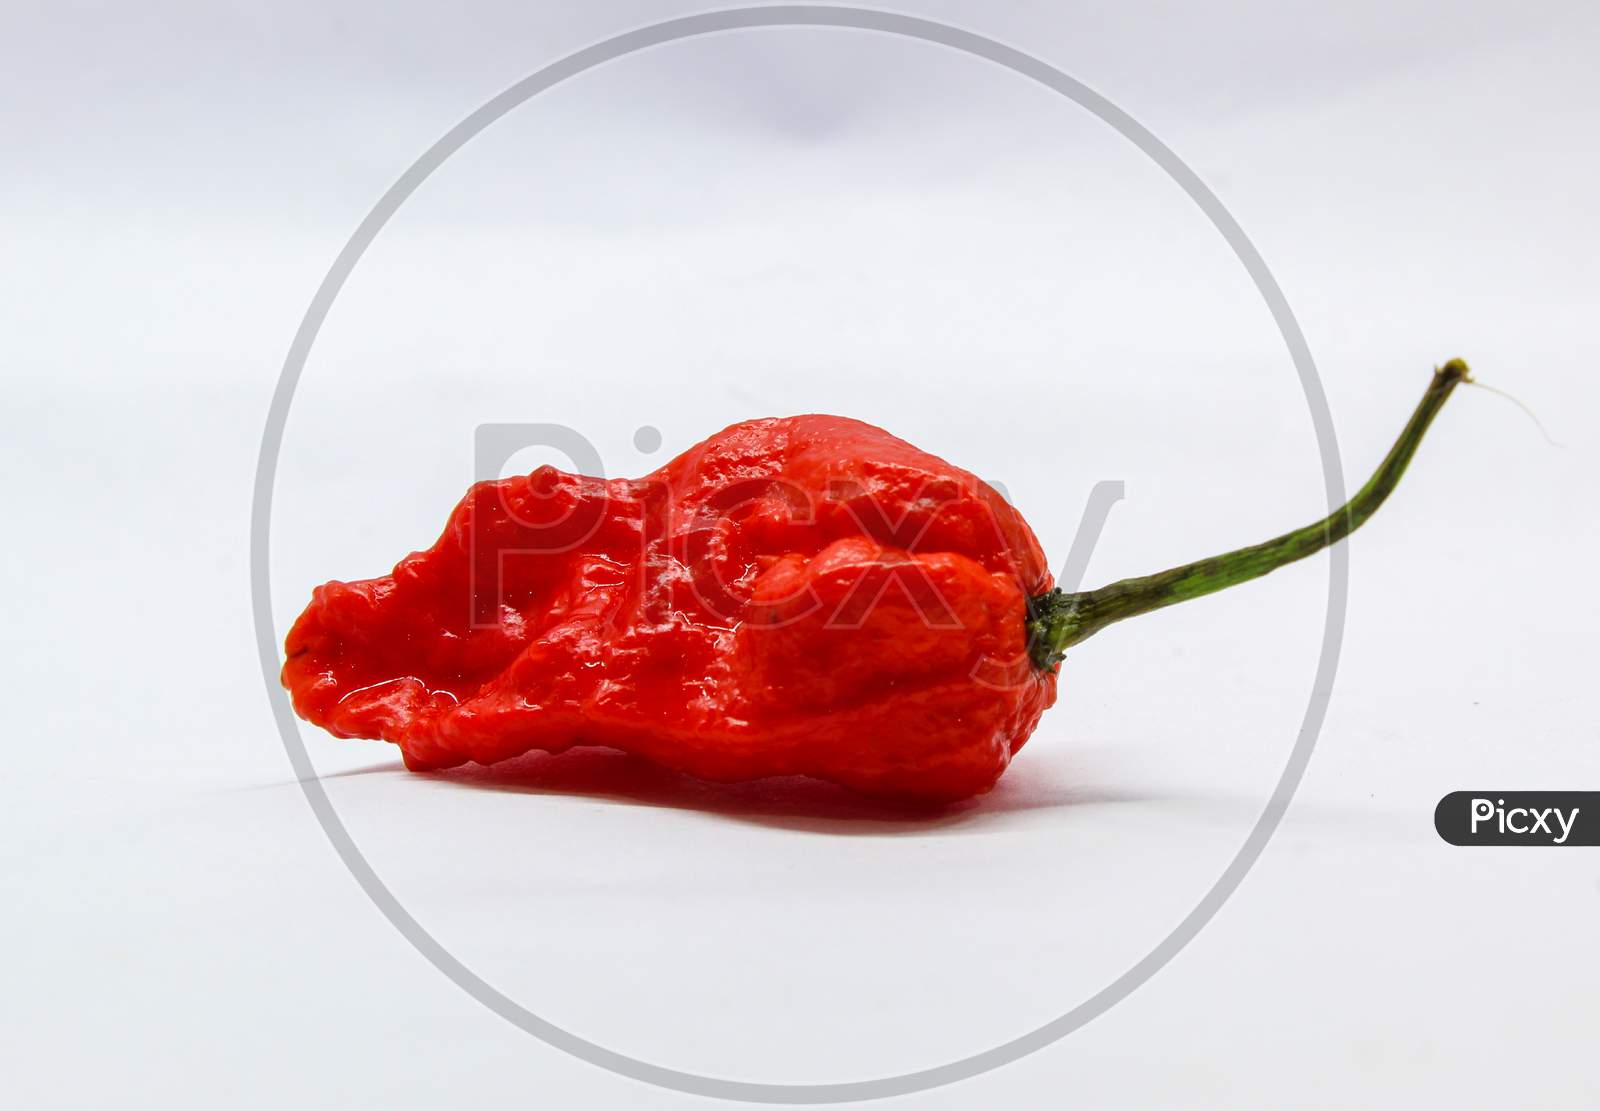 Hottest chilli